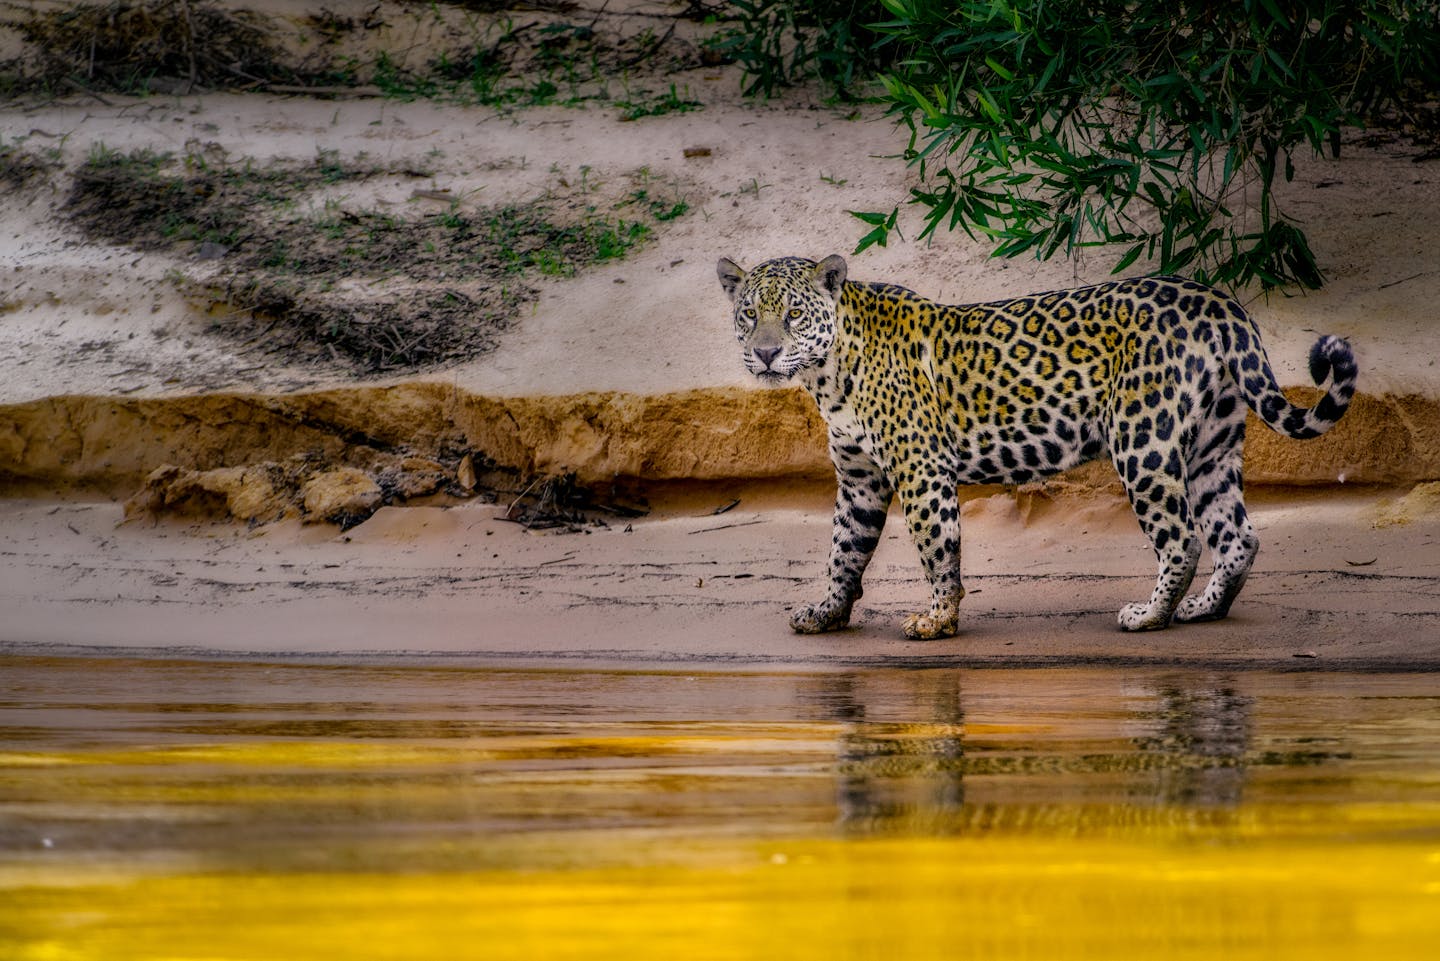 Jaguars: Kings of the jungle, balancing the Amazon's rich biodiversity